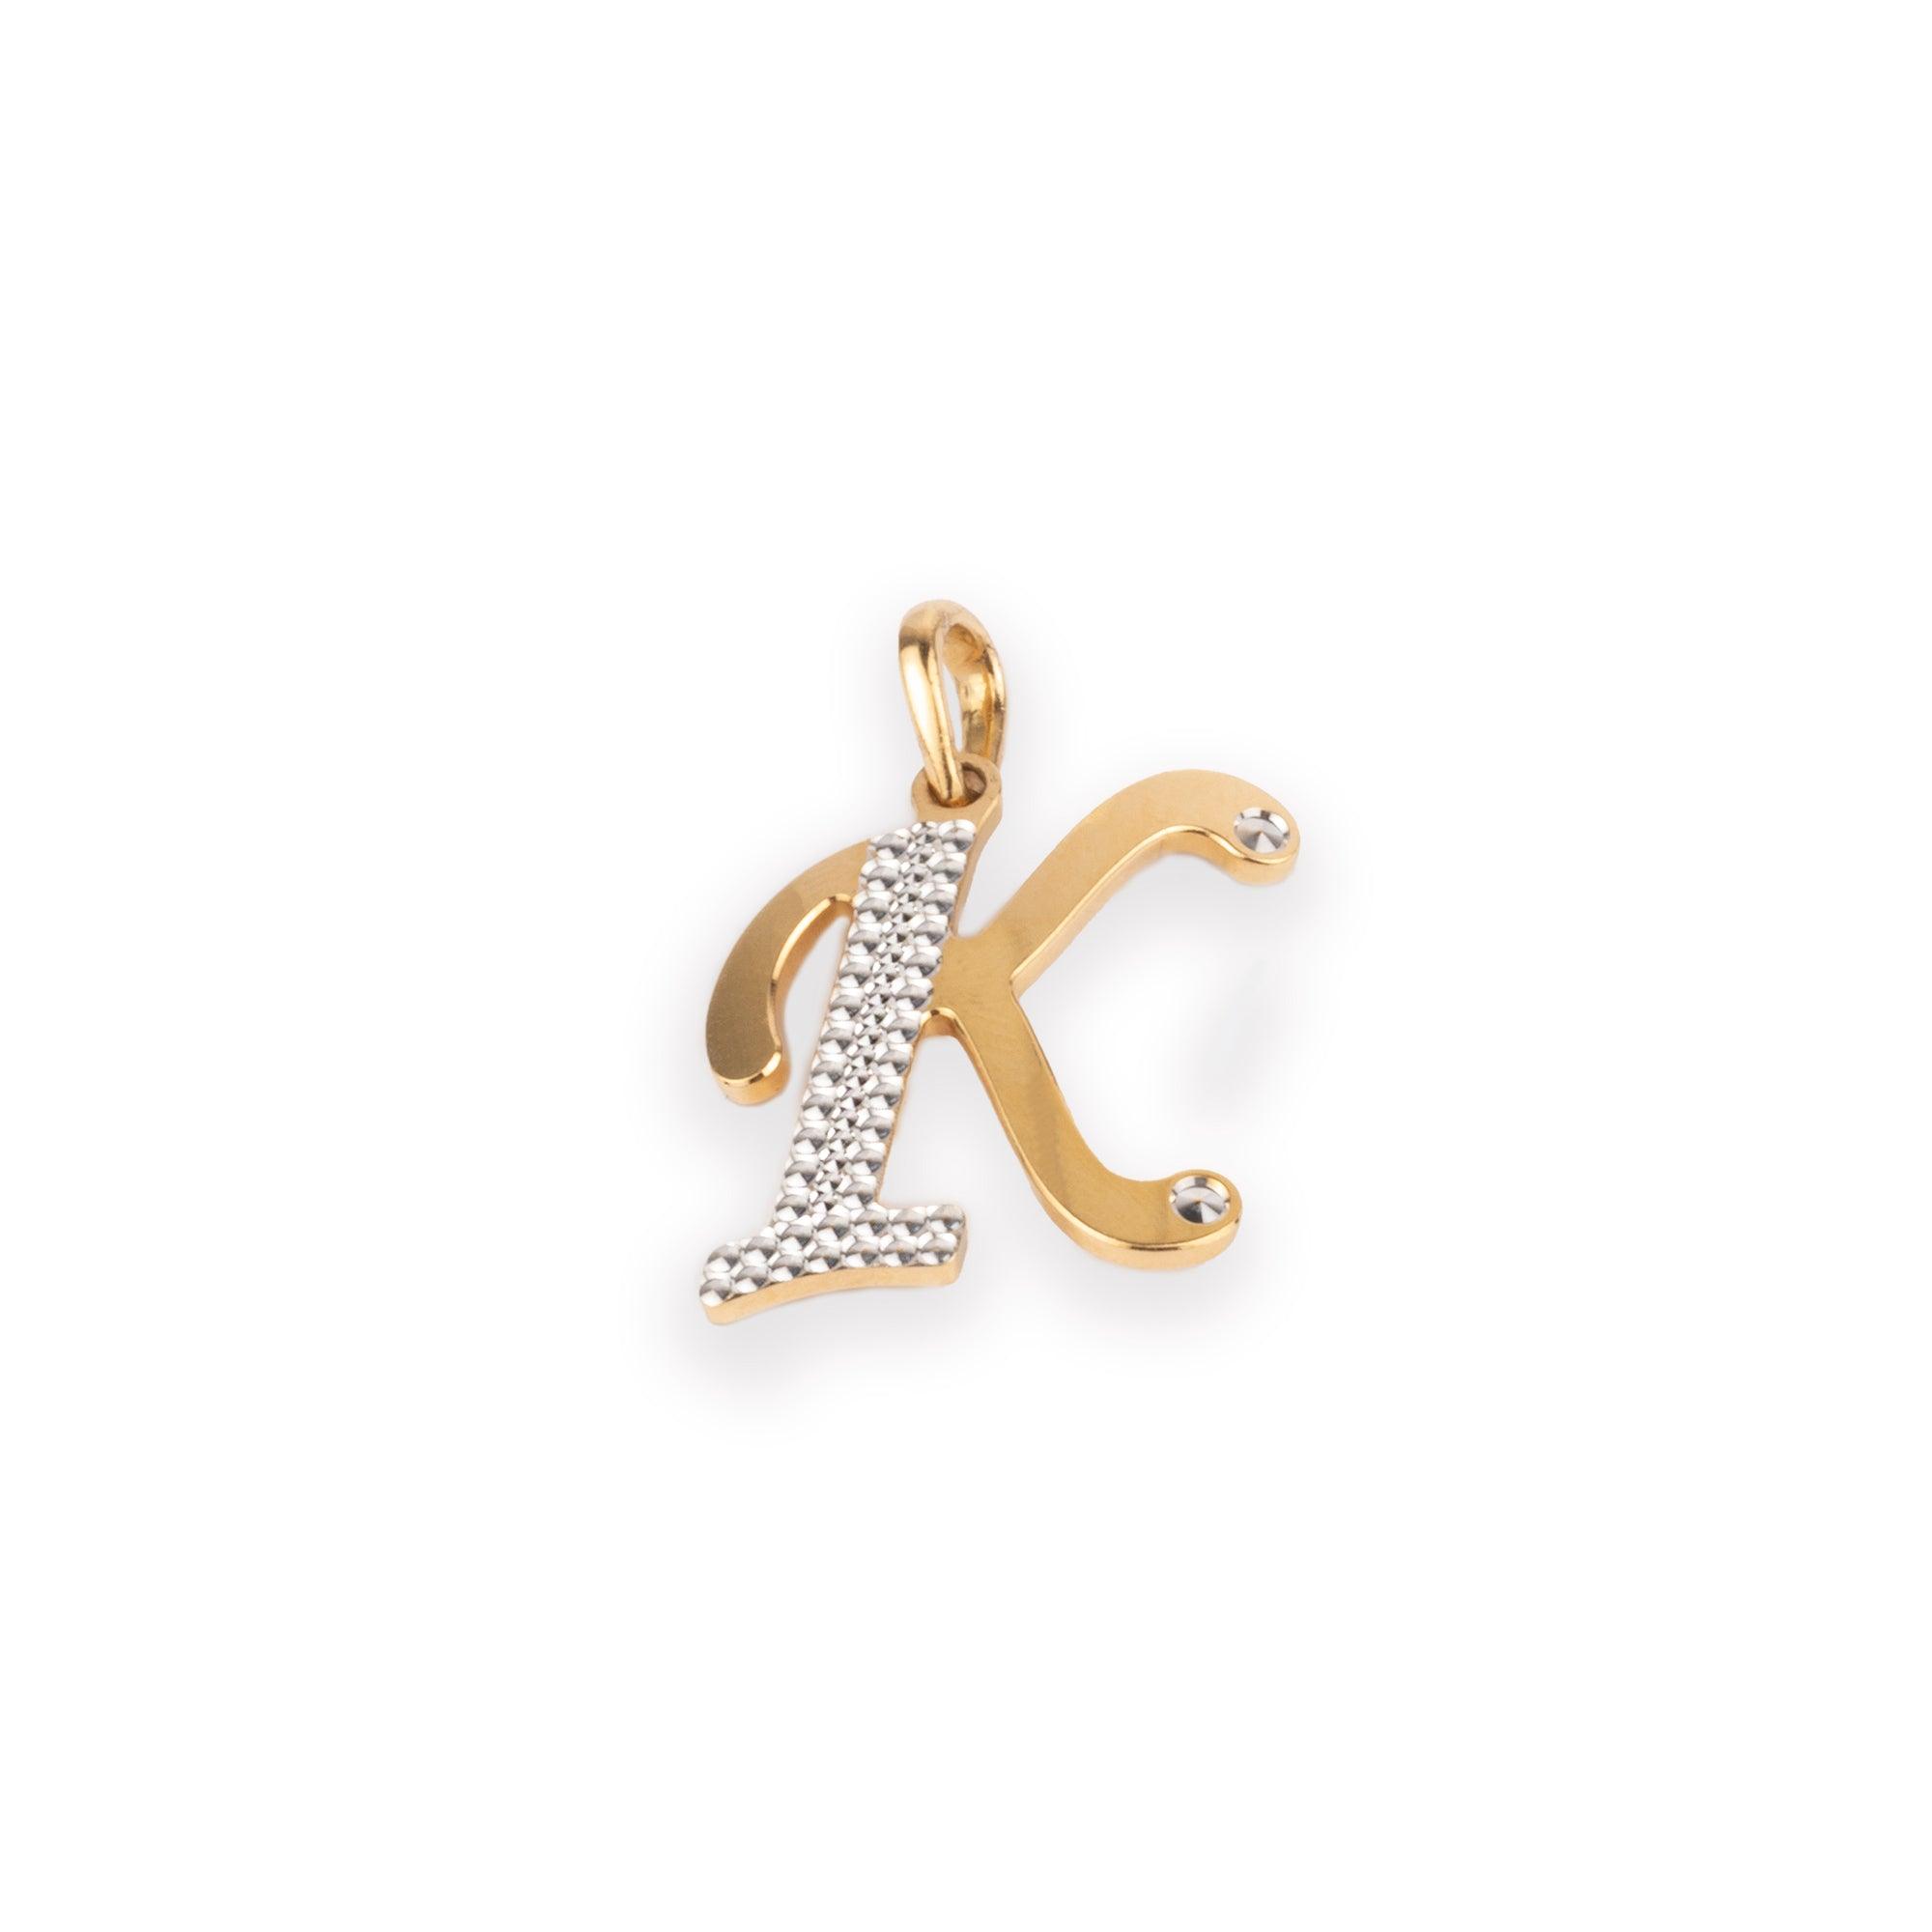 'K' 22ct Gold Initial Pendant with Rhodium Design P-7040R-K - Minar Jewellers